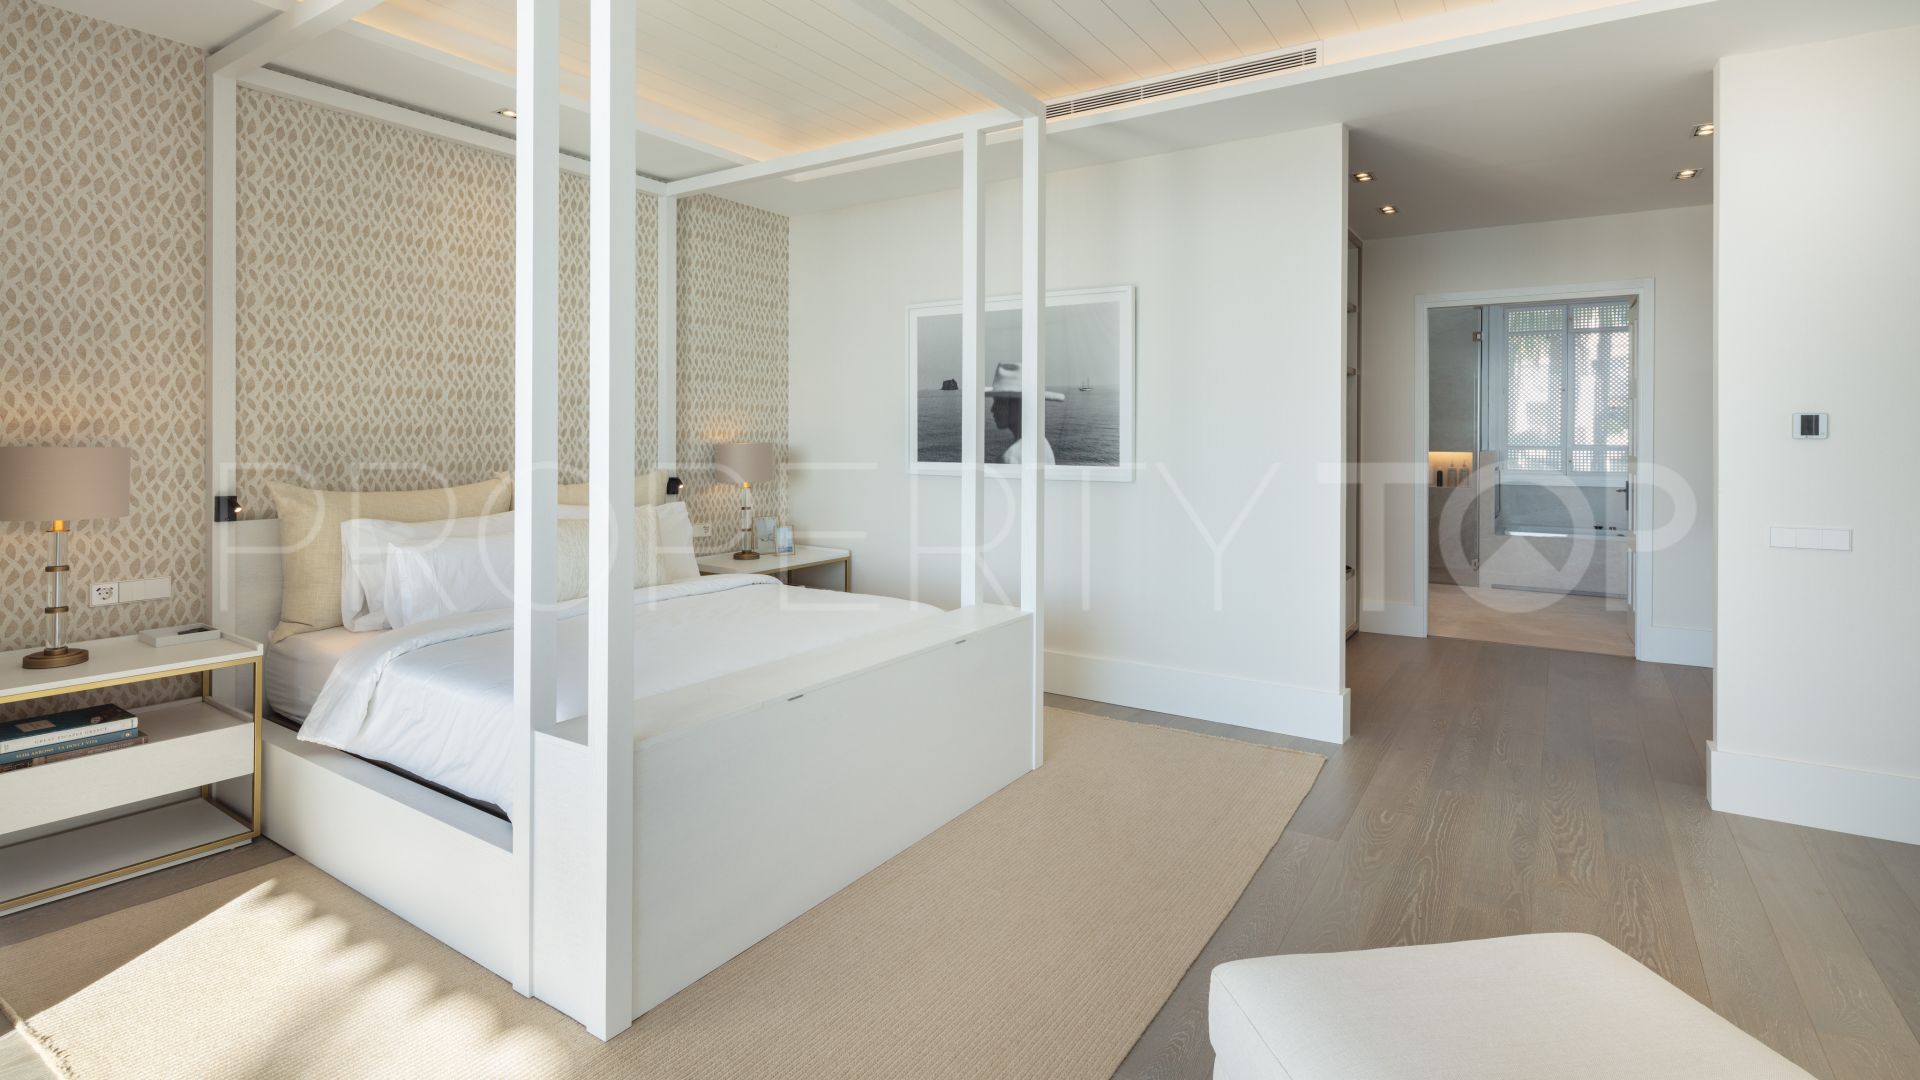 3 bedrooms duplex penthouse in Puente Romano for sale